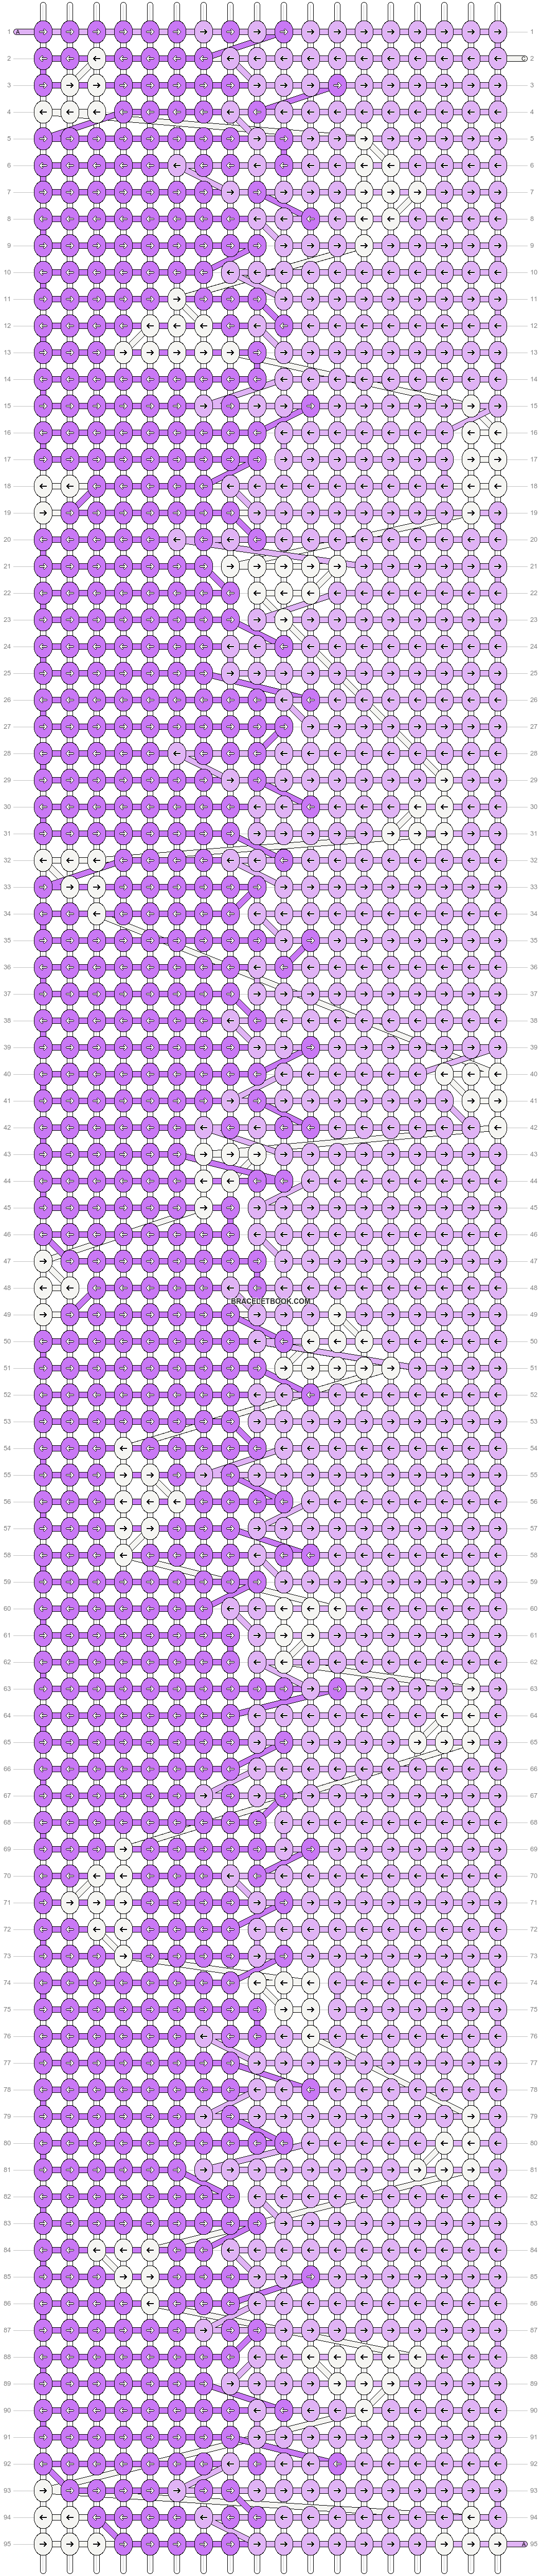 Alpha pattern #39992 variation #49591 pattern